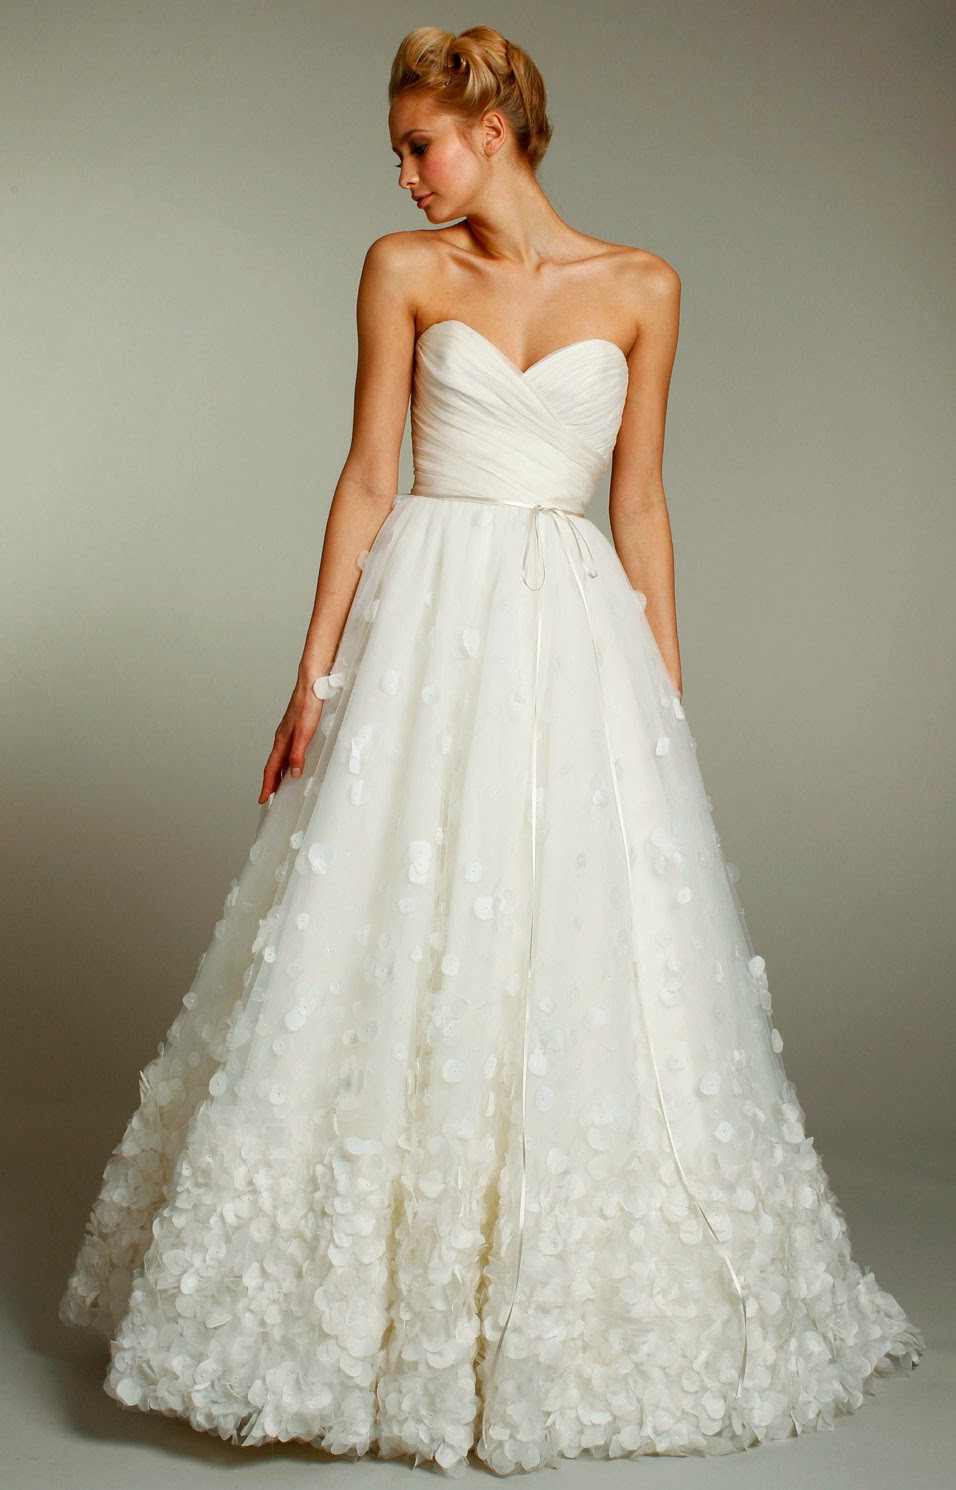 Cheap Wedding Dresses Under 100
 Cheap Ivory Wedding Dresses Under 100 Dollars Design Ideas